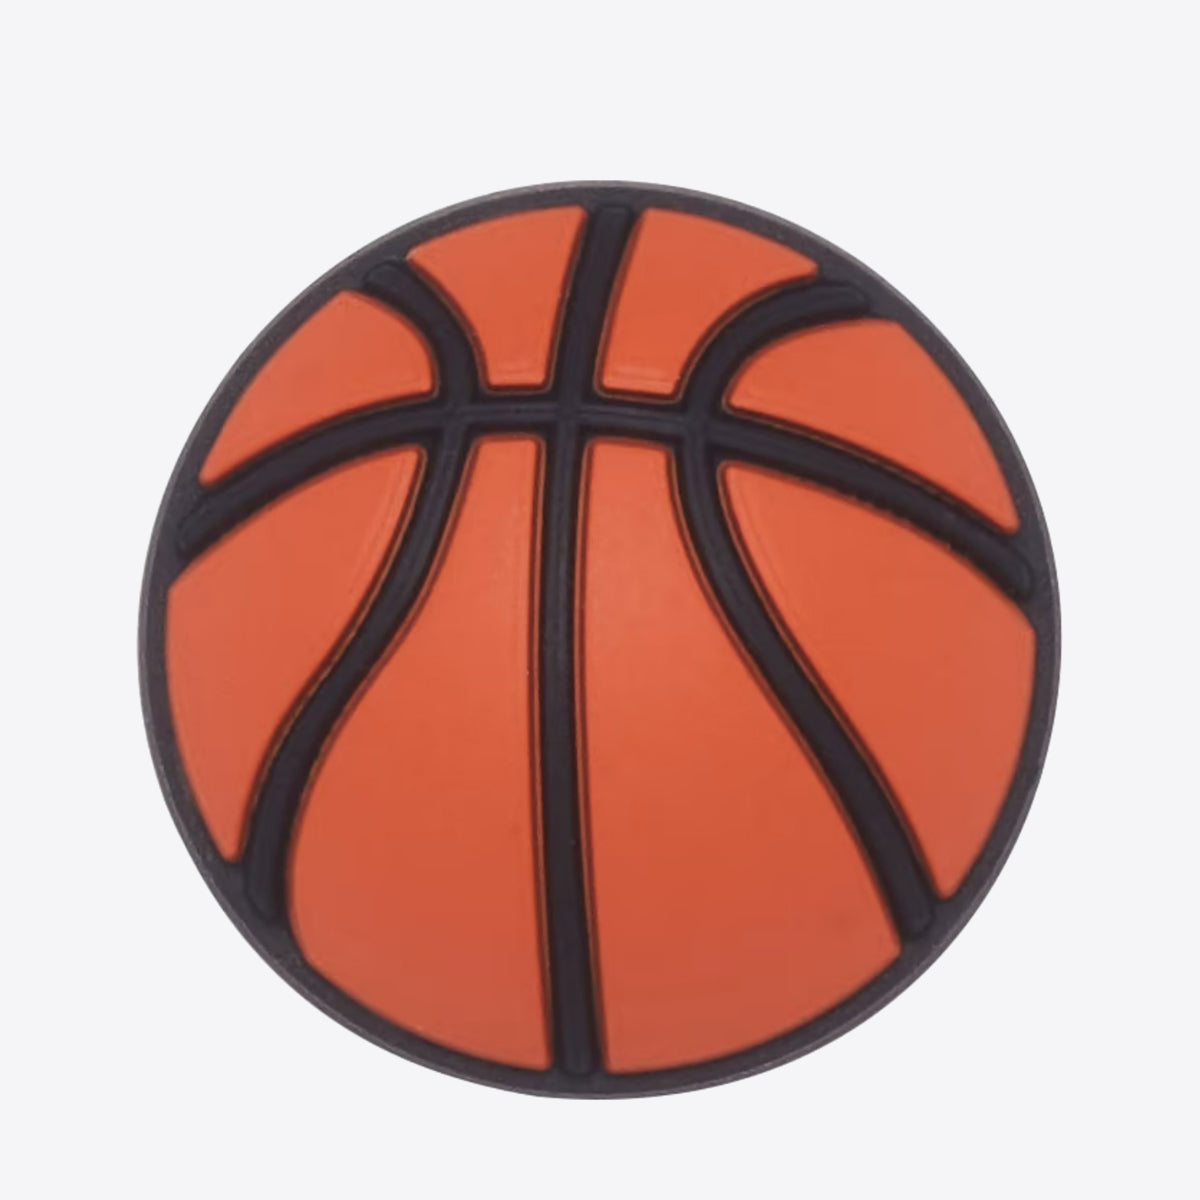 CROCS Jibbitz Basketball Basketball - Image 1